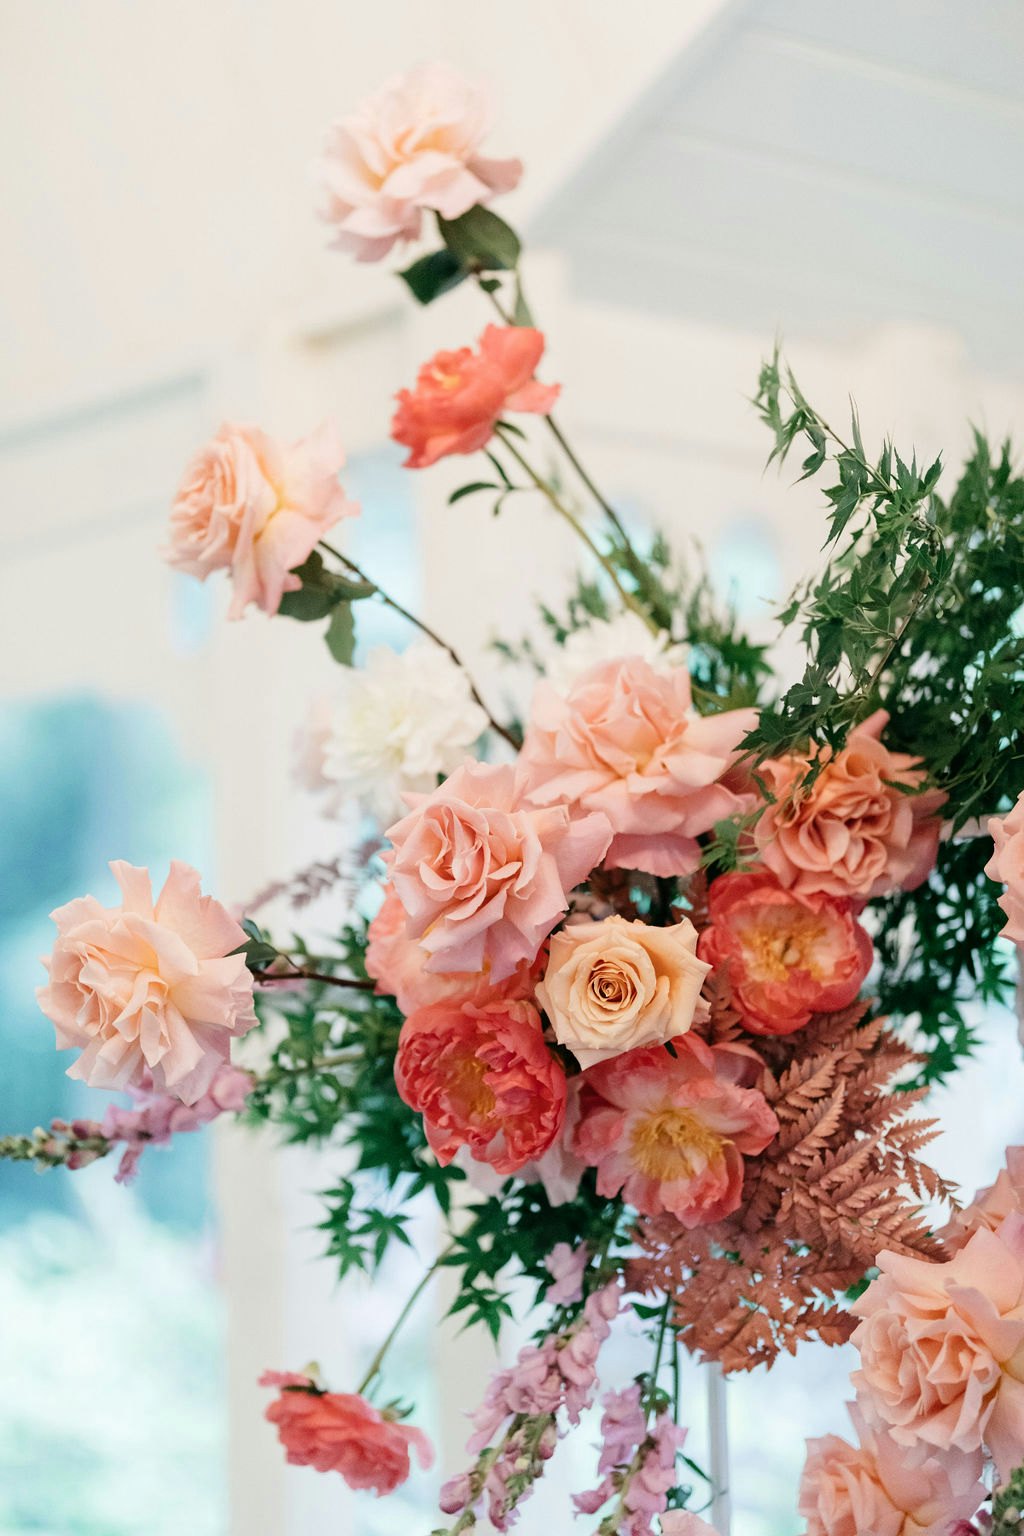 Flowers at wedding ceremony 